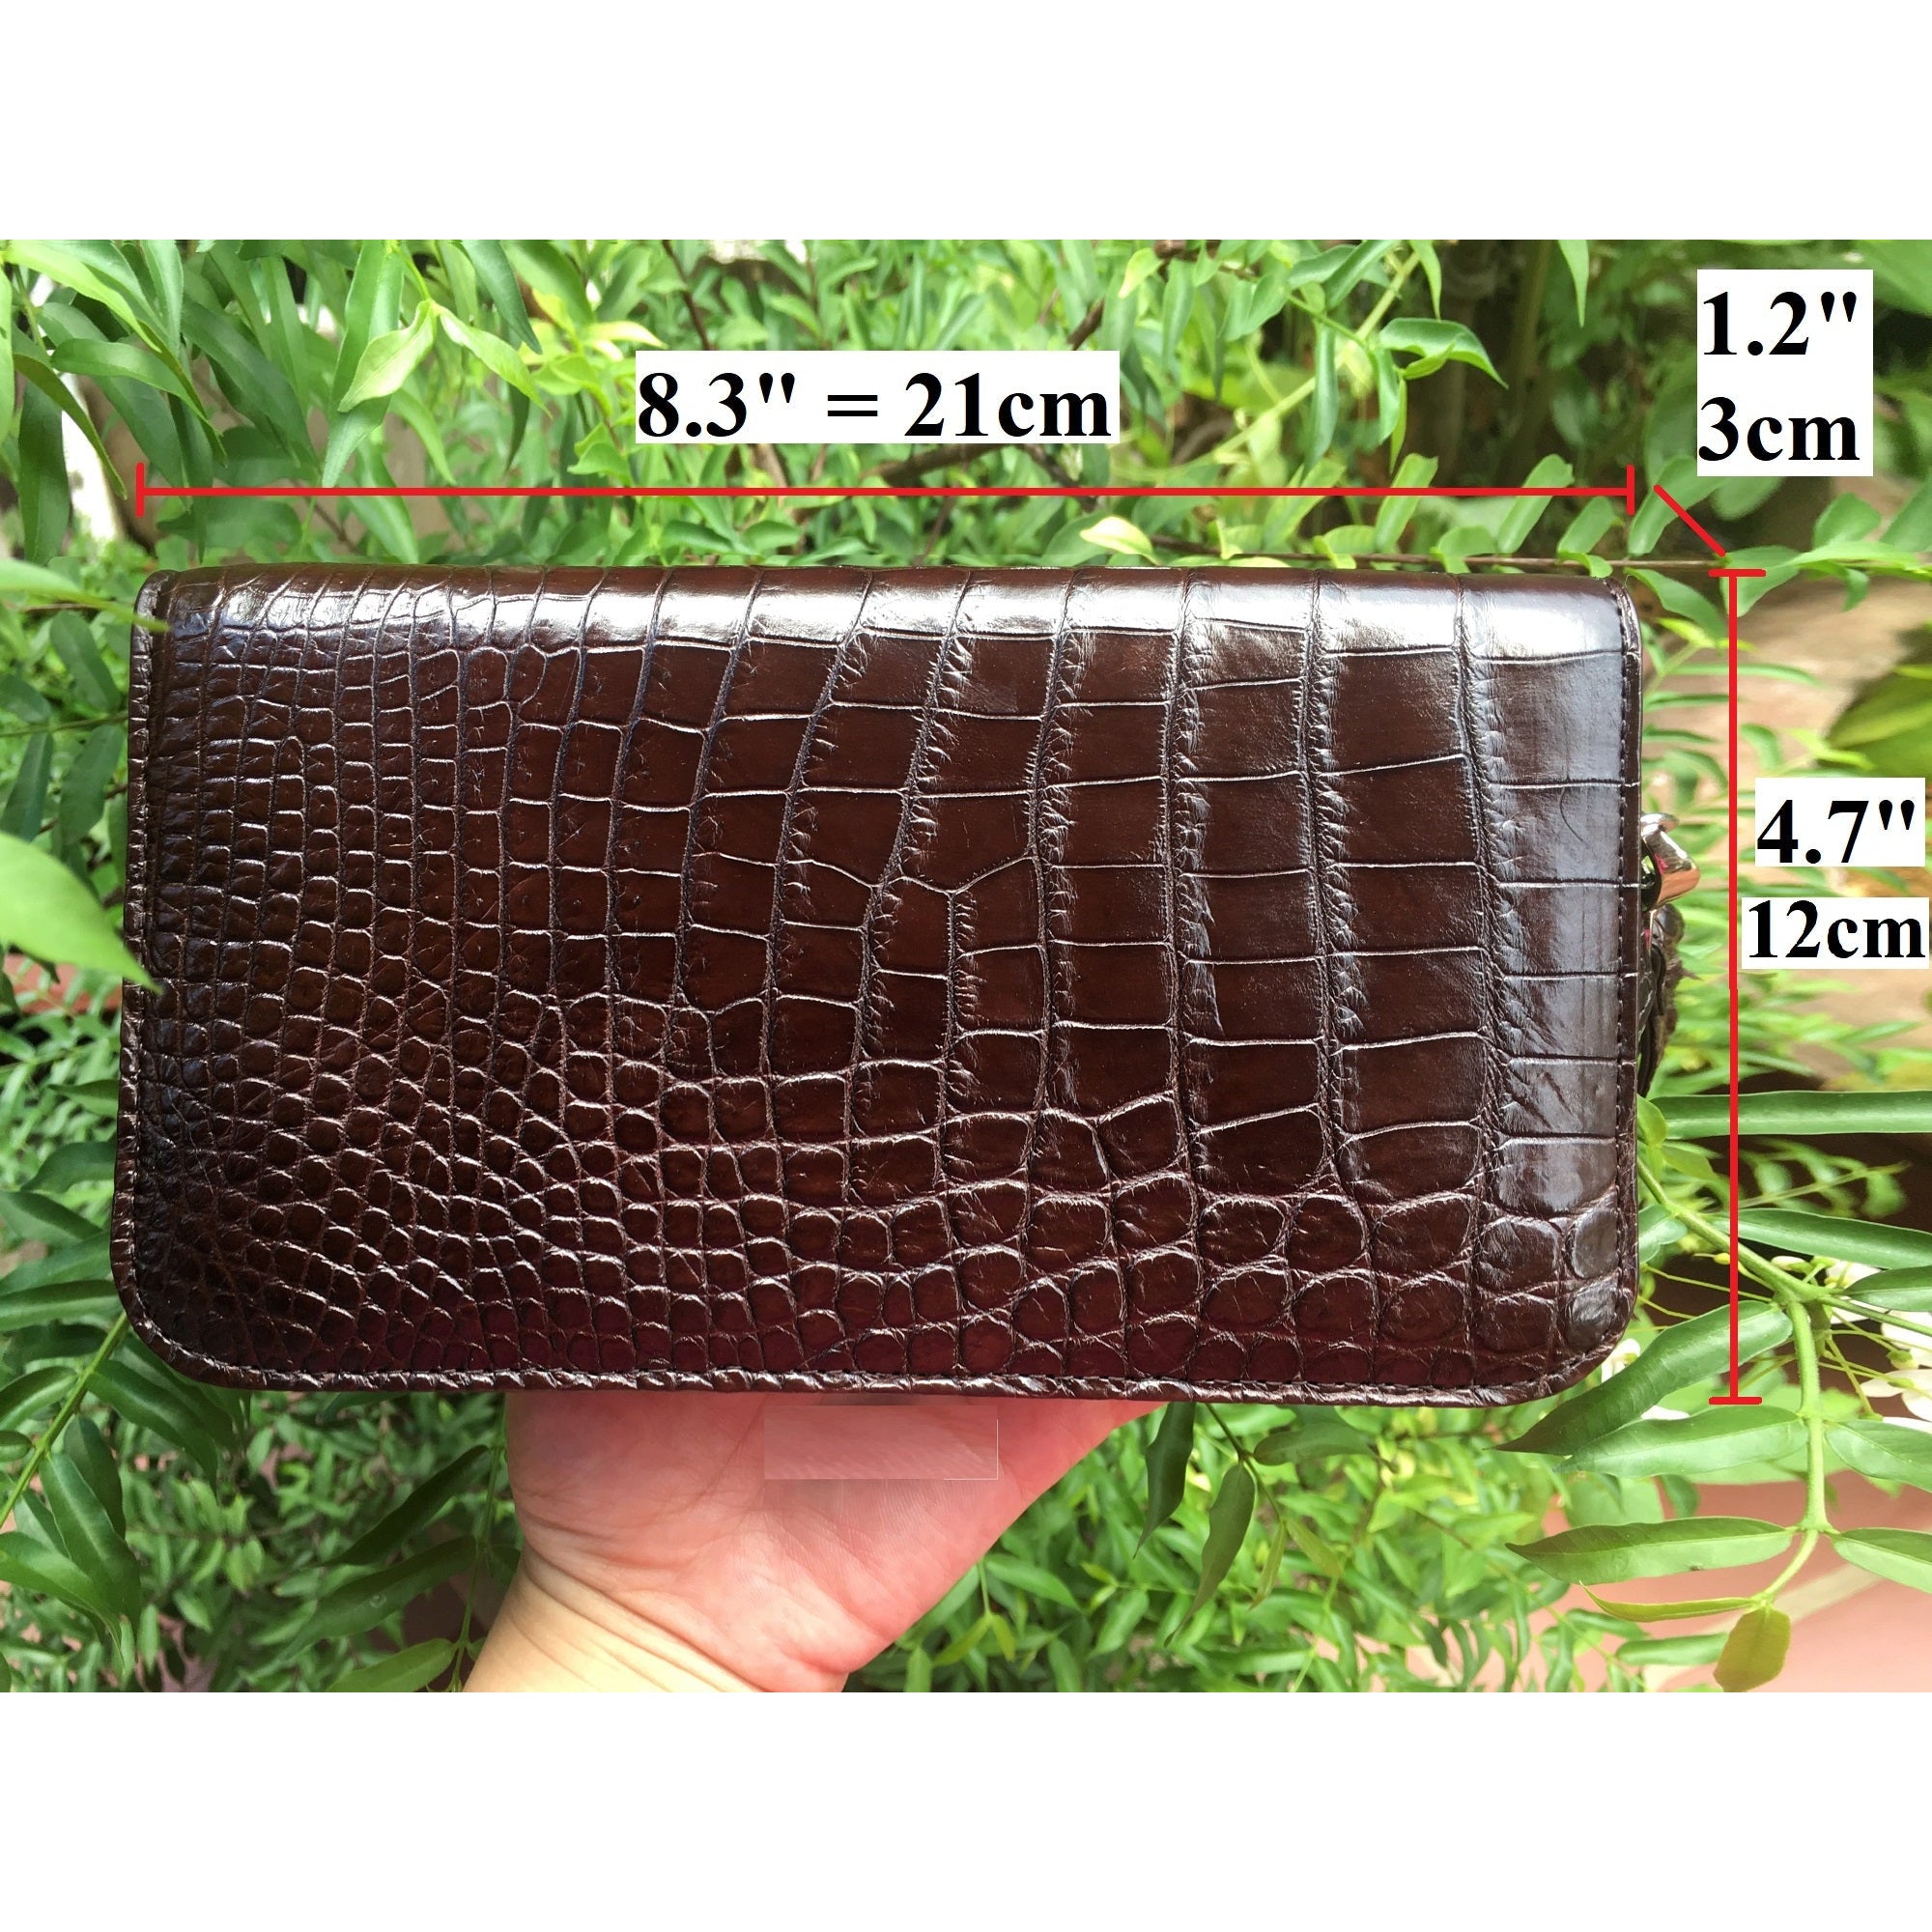 Brown Women's Long Purse Wallet Alligator Leather Clutch Large Capacity Luxury Ladies Crocodile Wristlet Organizer RFID Blocking Wallet VINU-07 - Vinacreations